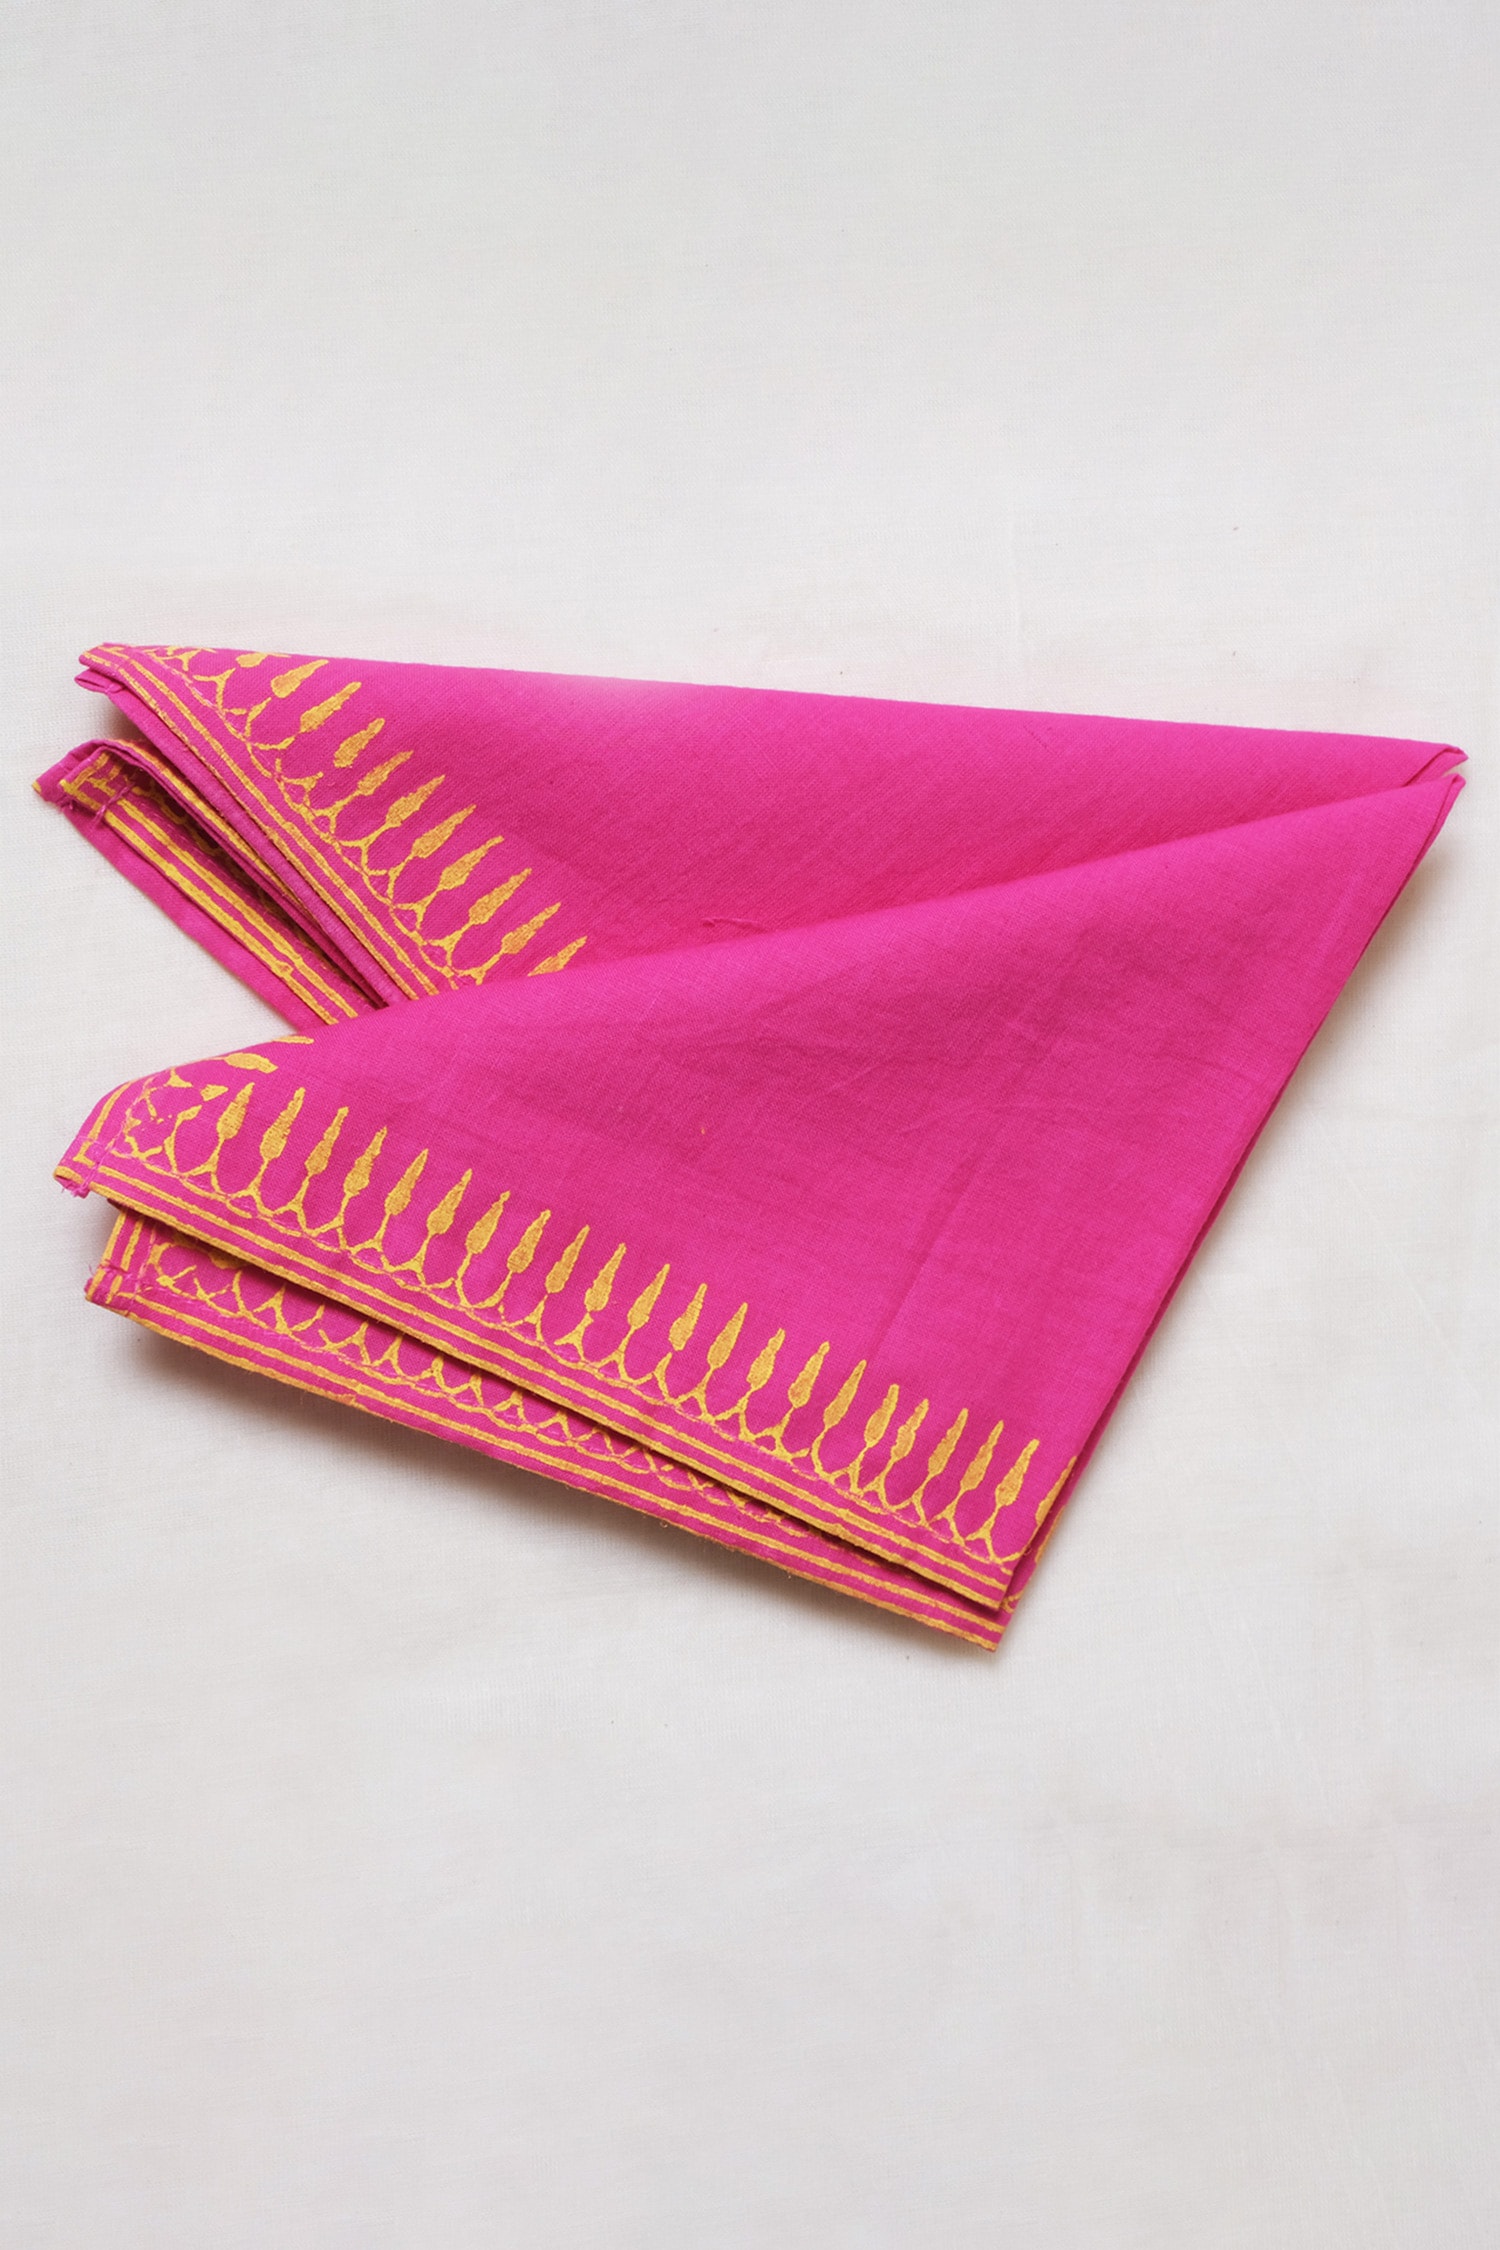 Inheritance India Pink 100% Cotton Hand Block Printed Border Napkins - Set Of 4